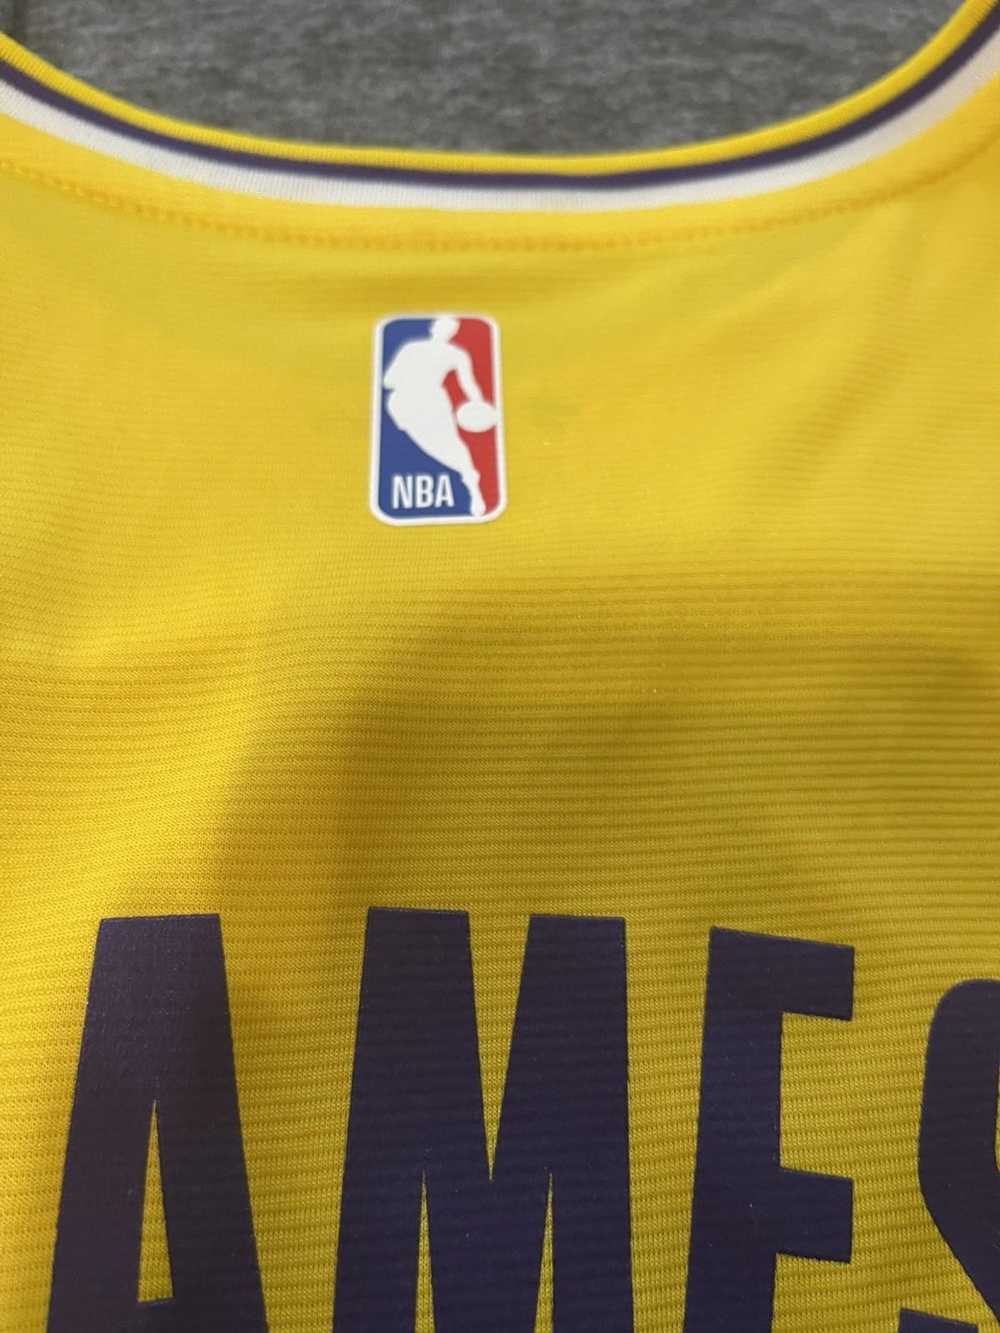 NBA Lakers Lebron James - image 1